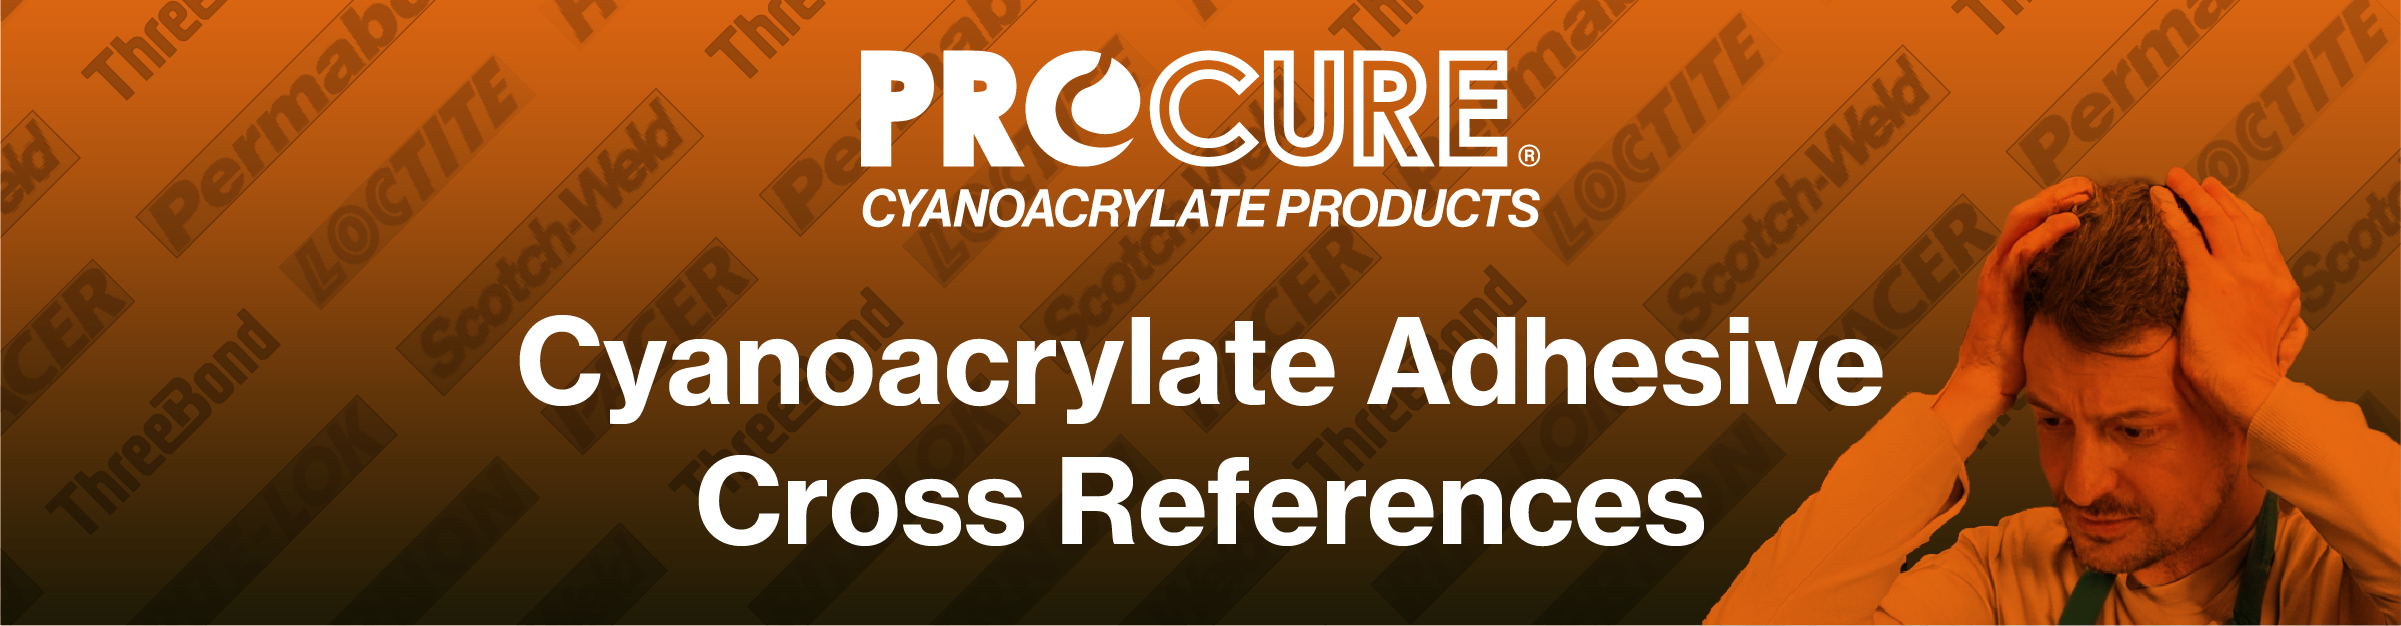 Cyanoacrylate Adhesive Cross References Banner